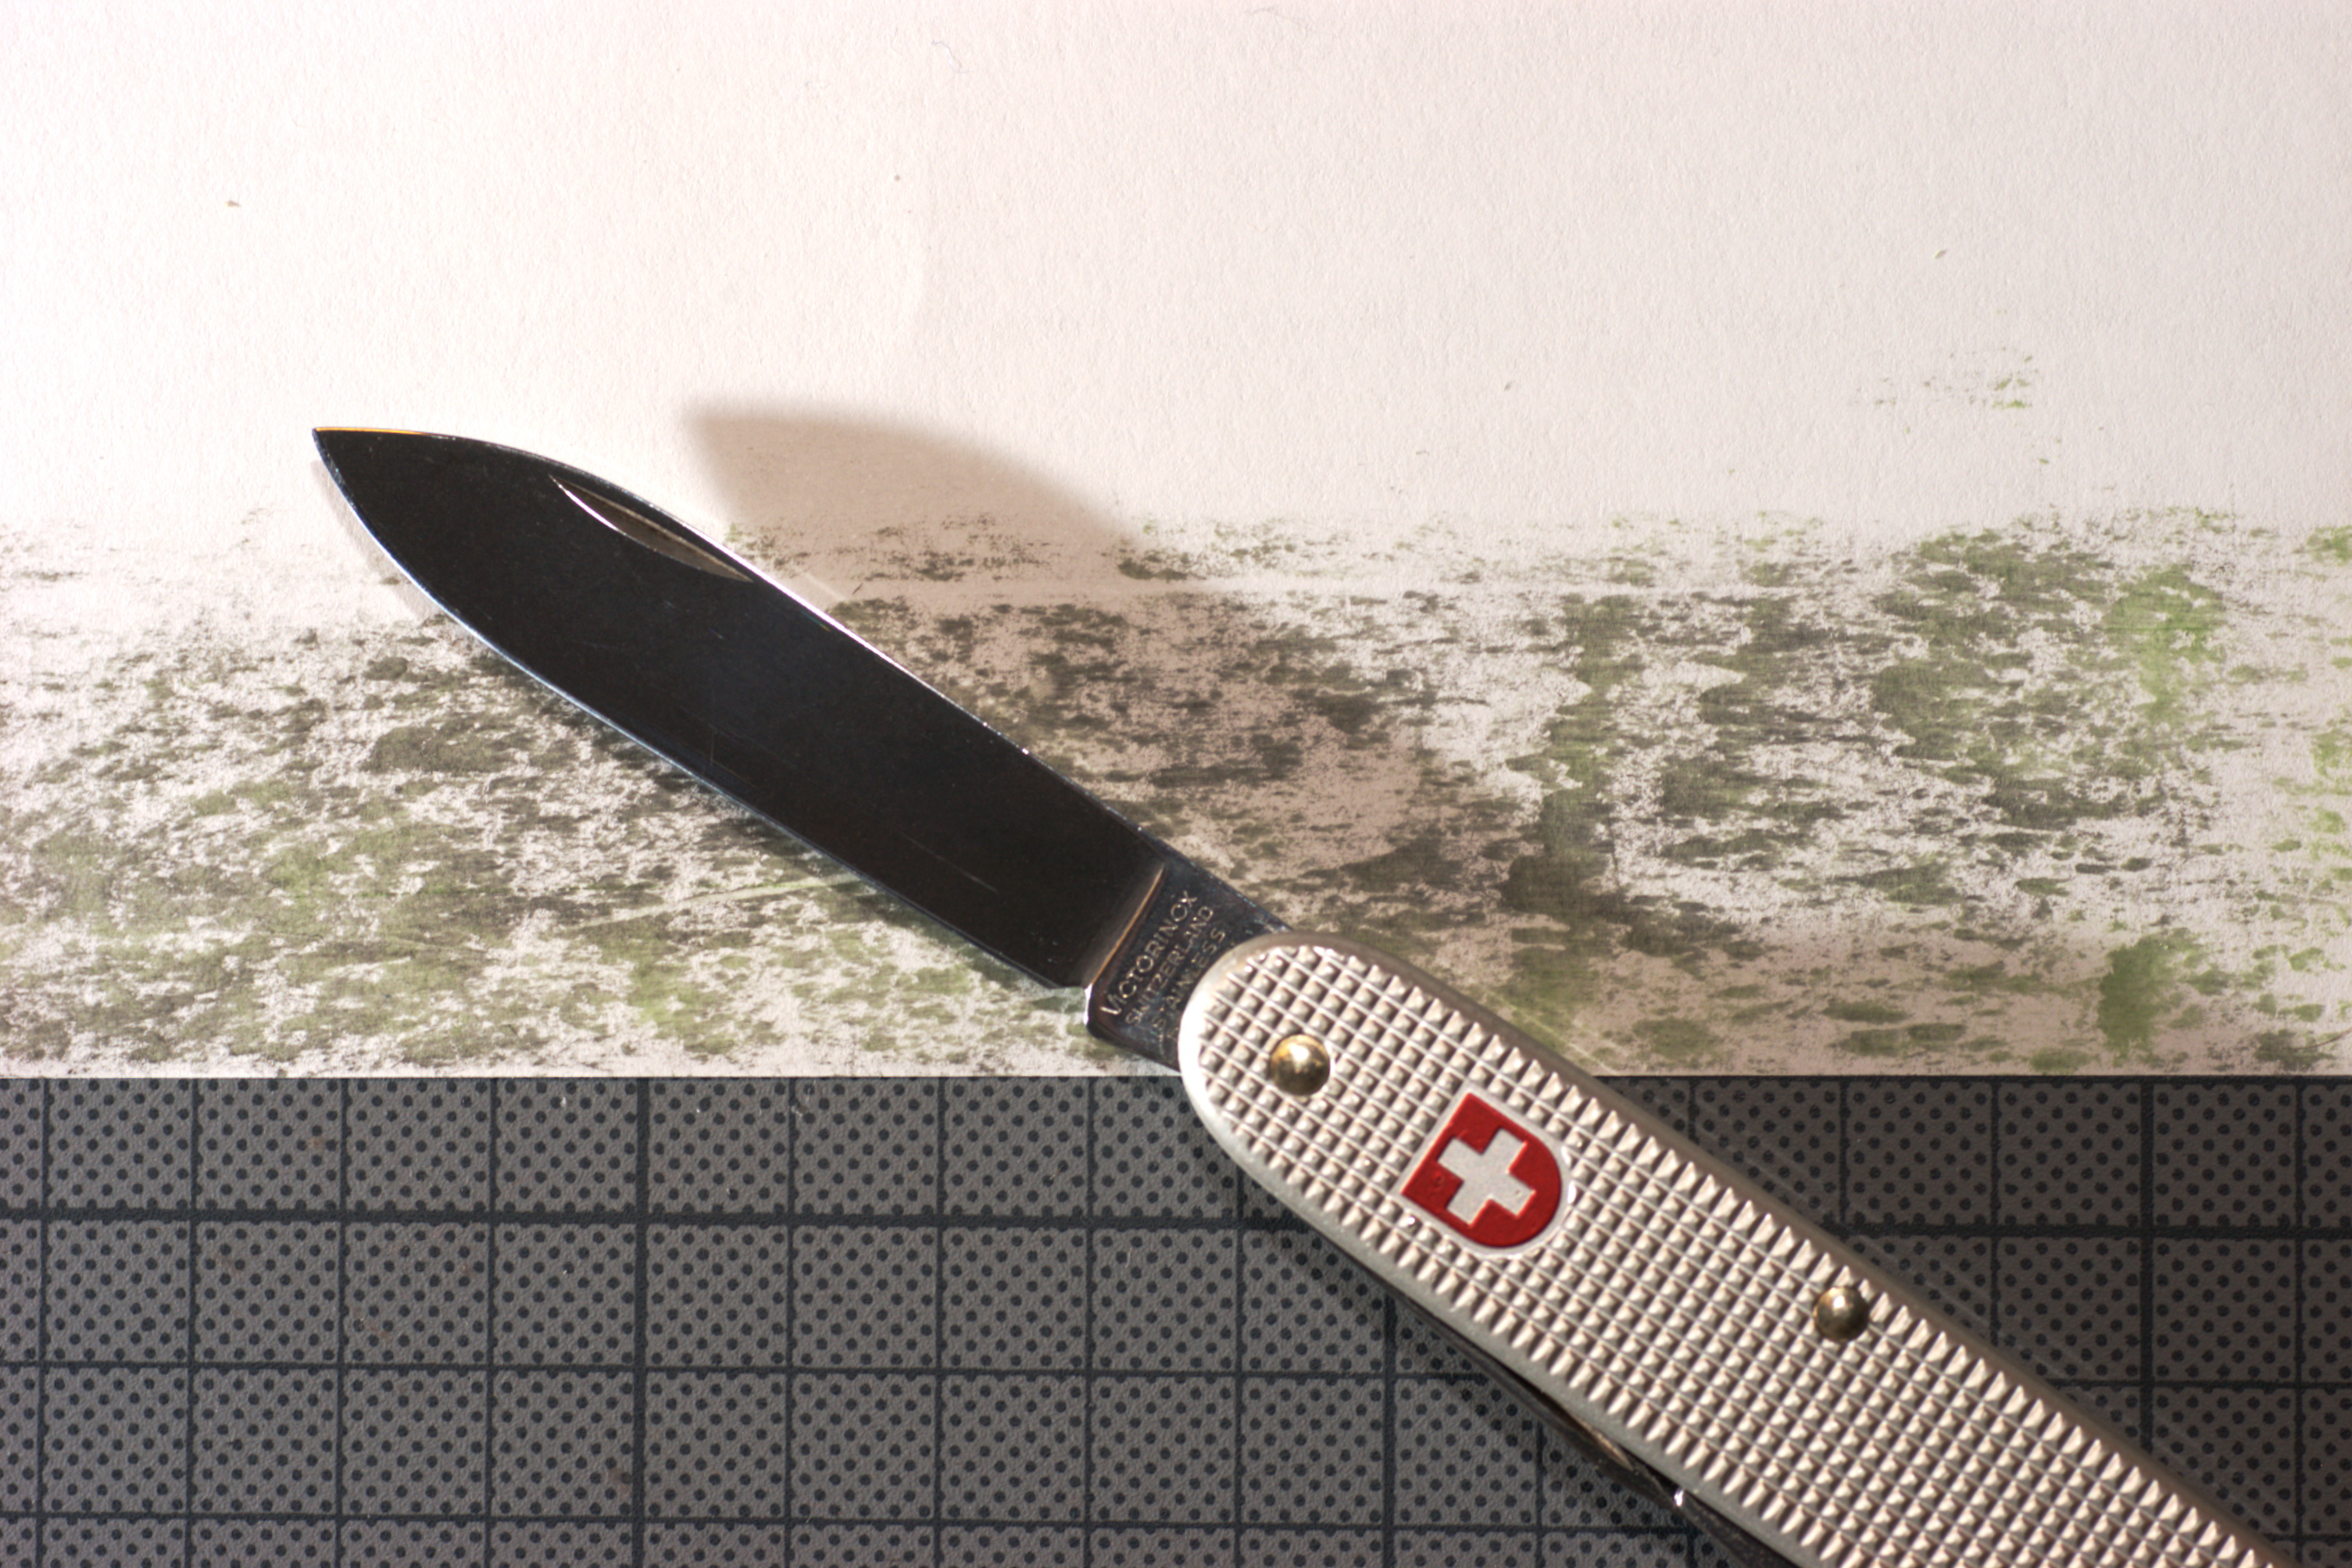 File:Sharpening knive with polishing paste 2.jpeg - Wikimedia Commons